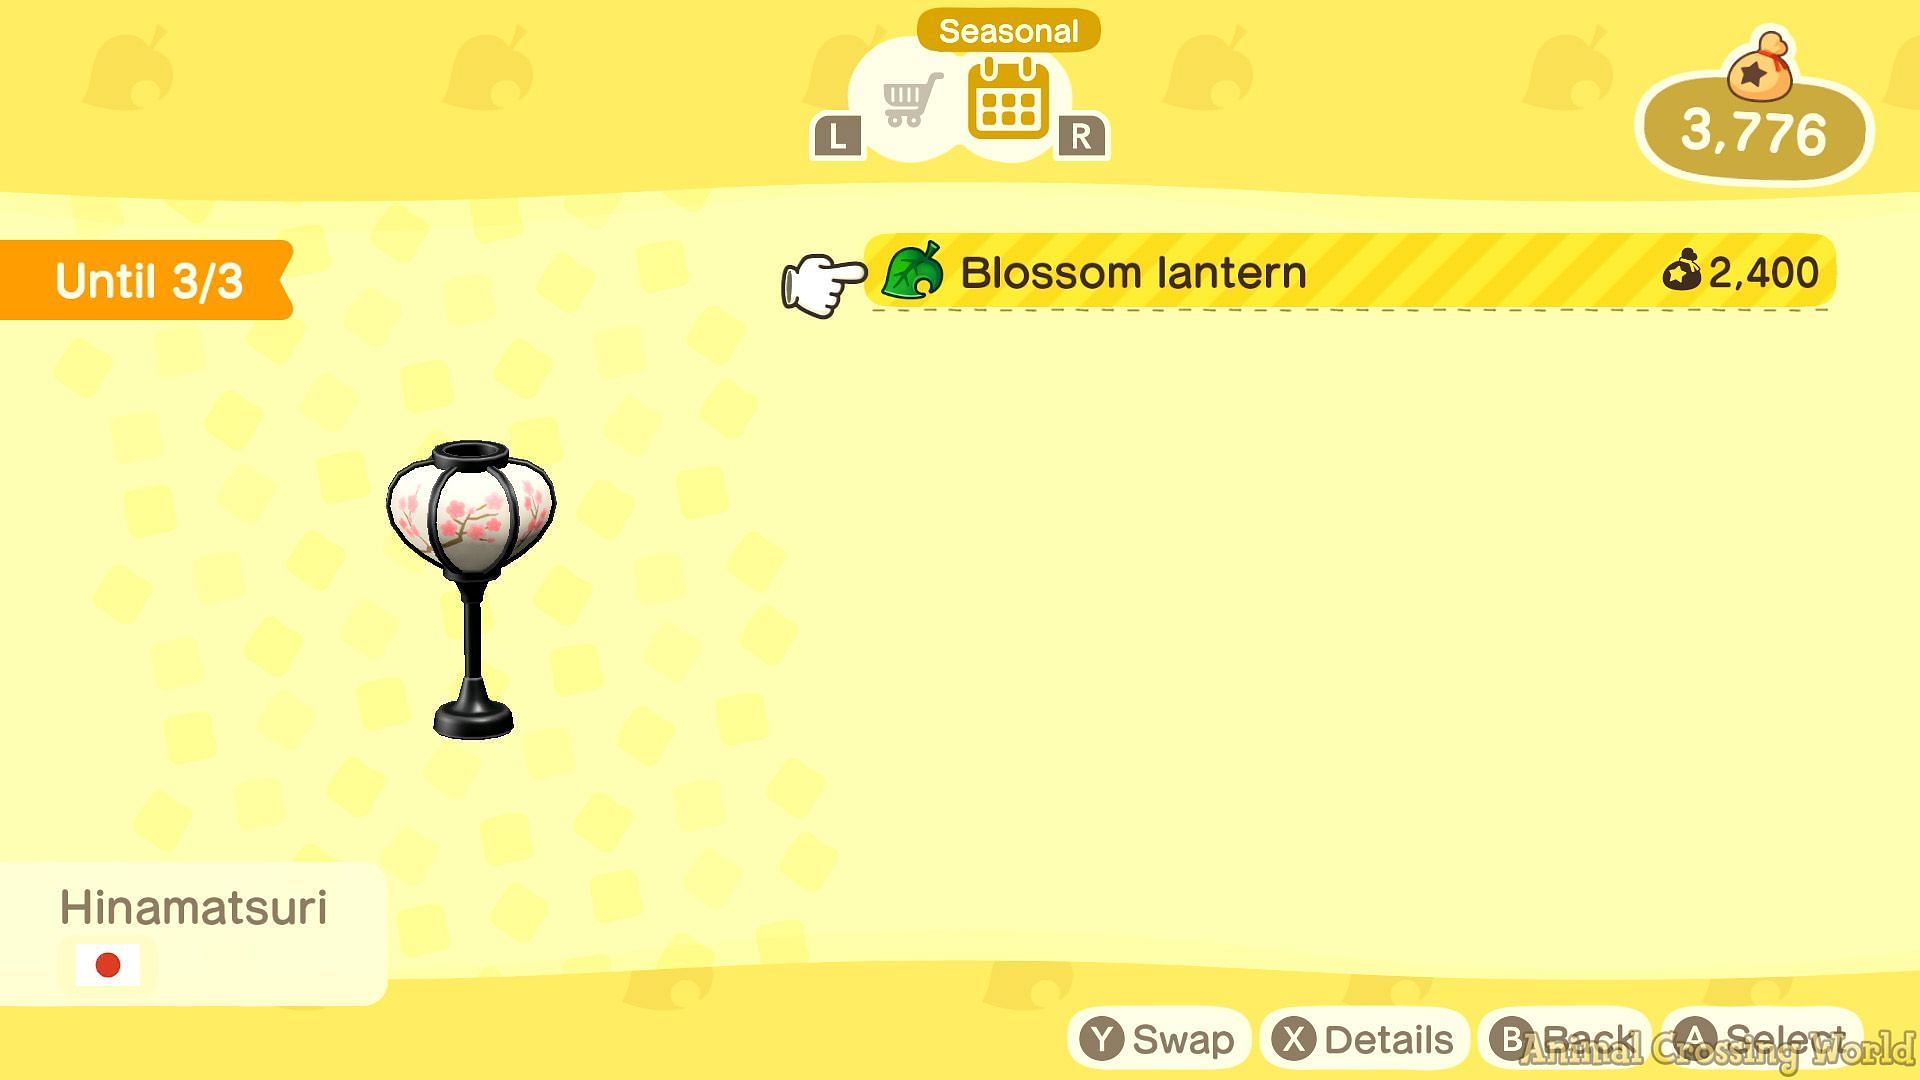 The Blossom Lantern from the Hinamatsuri items in New Horizons (Image via Animal Crossing World)